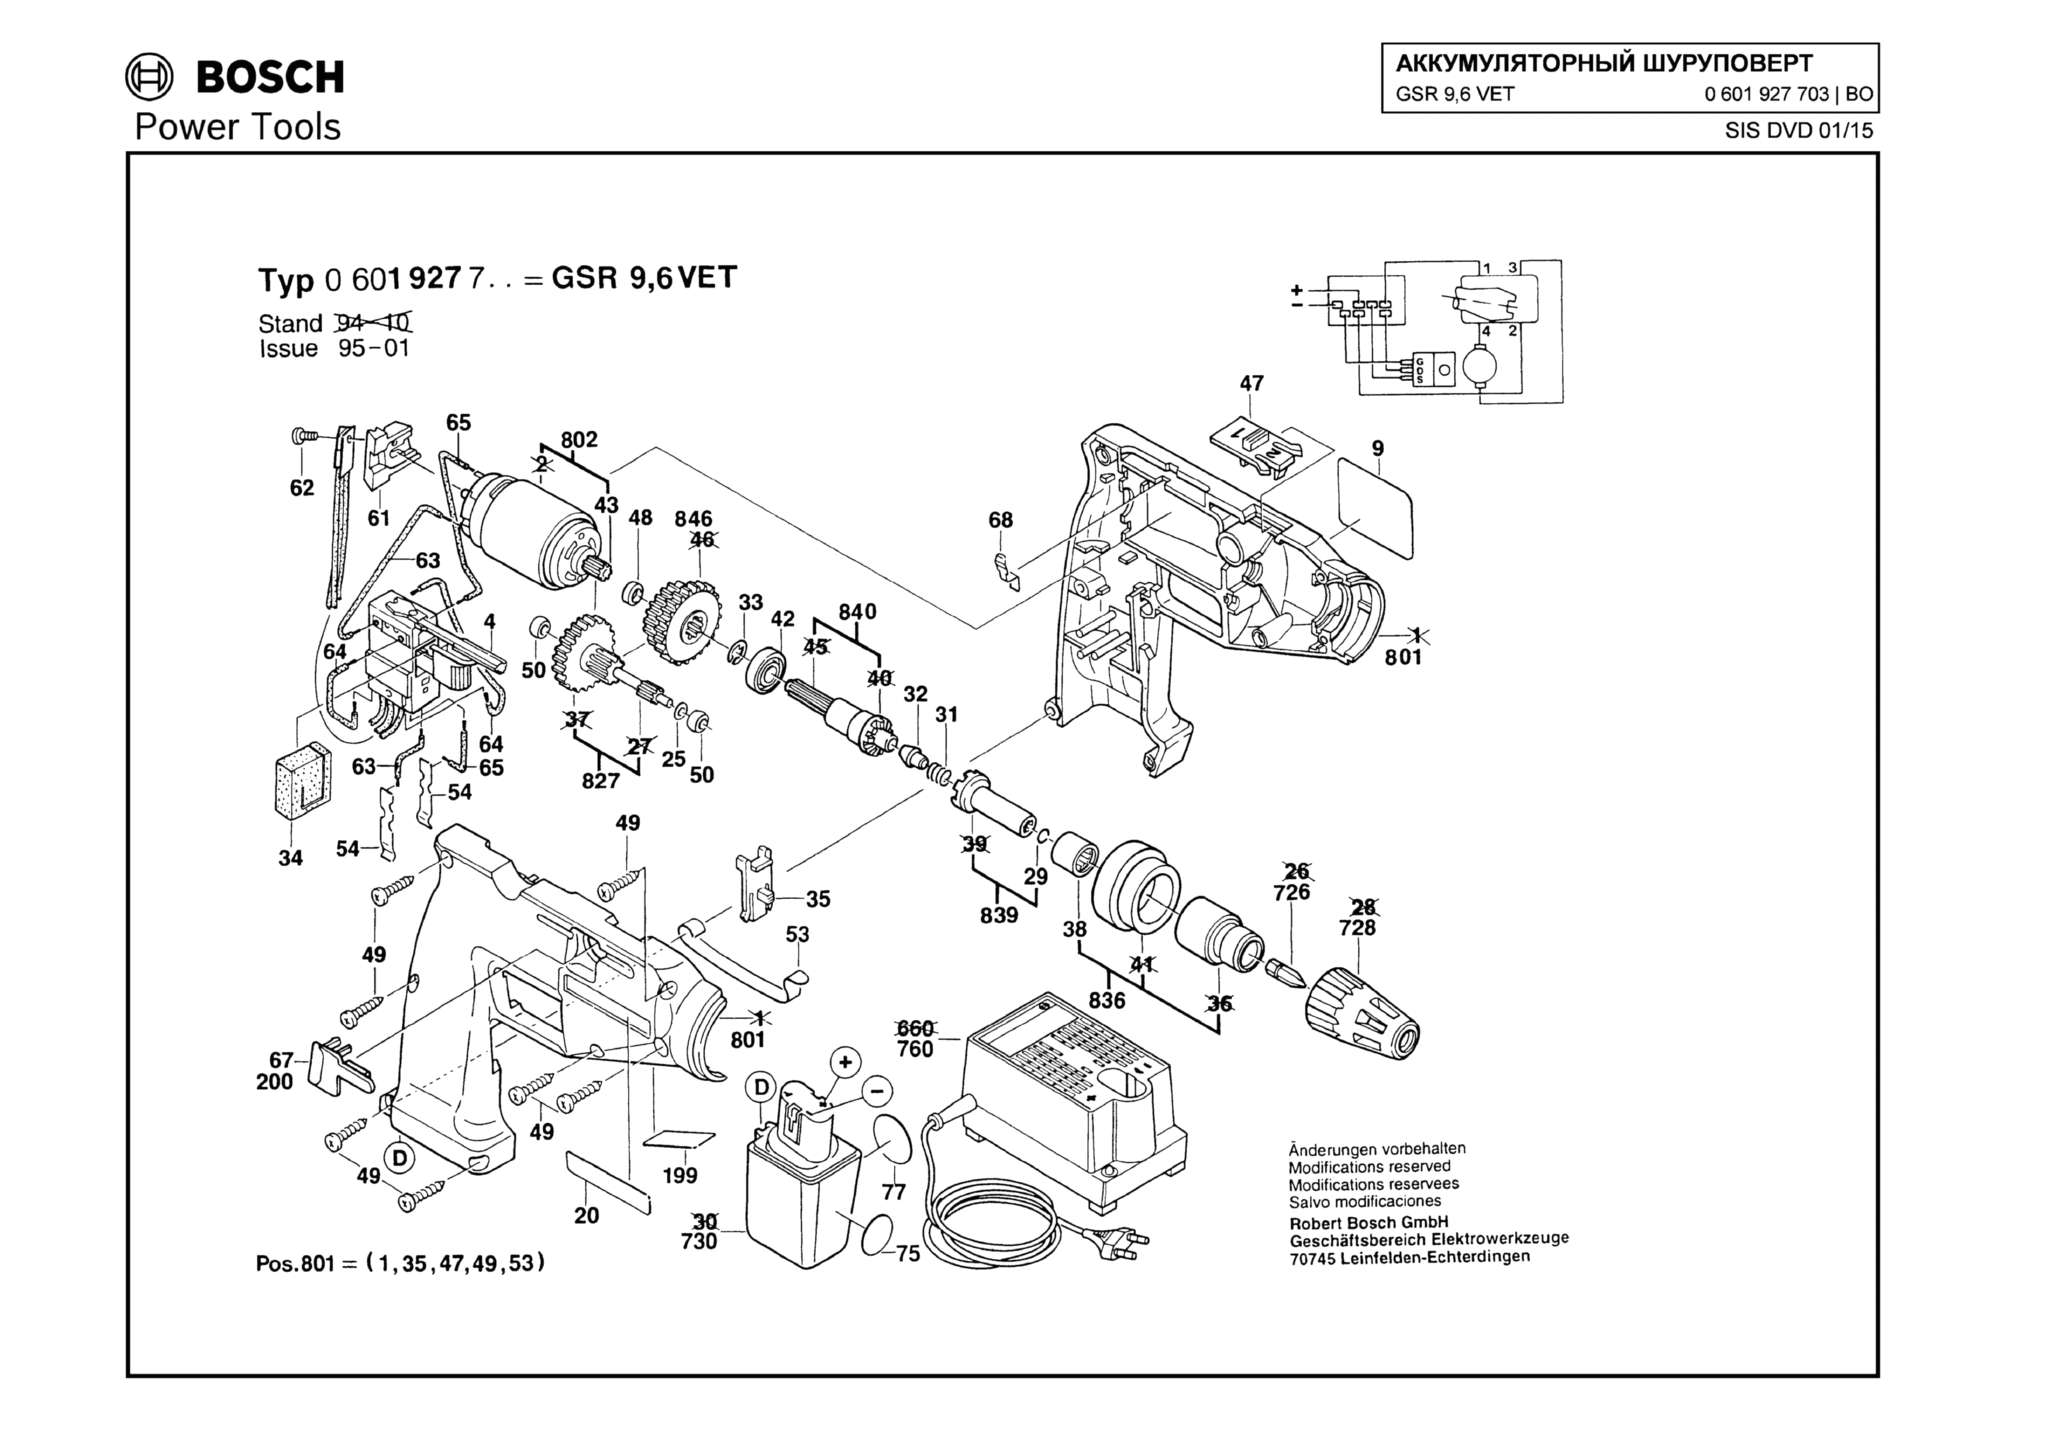 Запчасти, схема и деталировка Bosch GSR 9,6 VET (ТИП 0601927703)